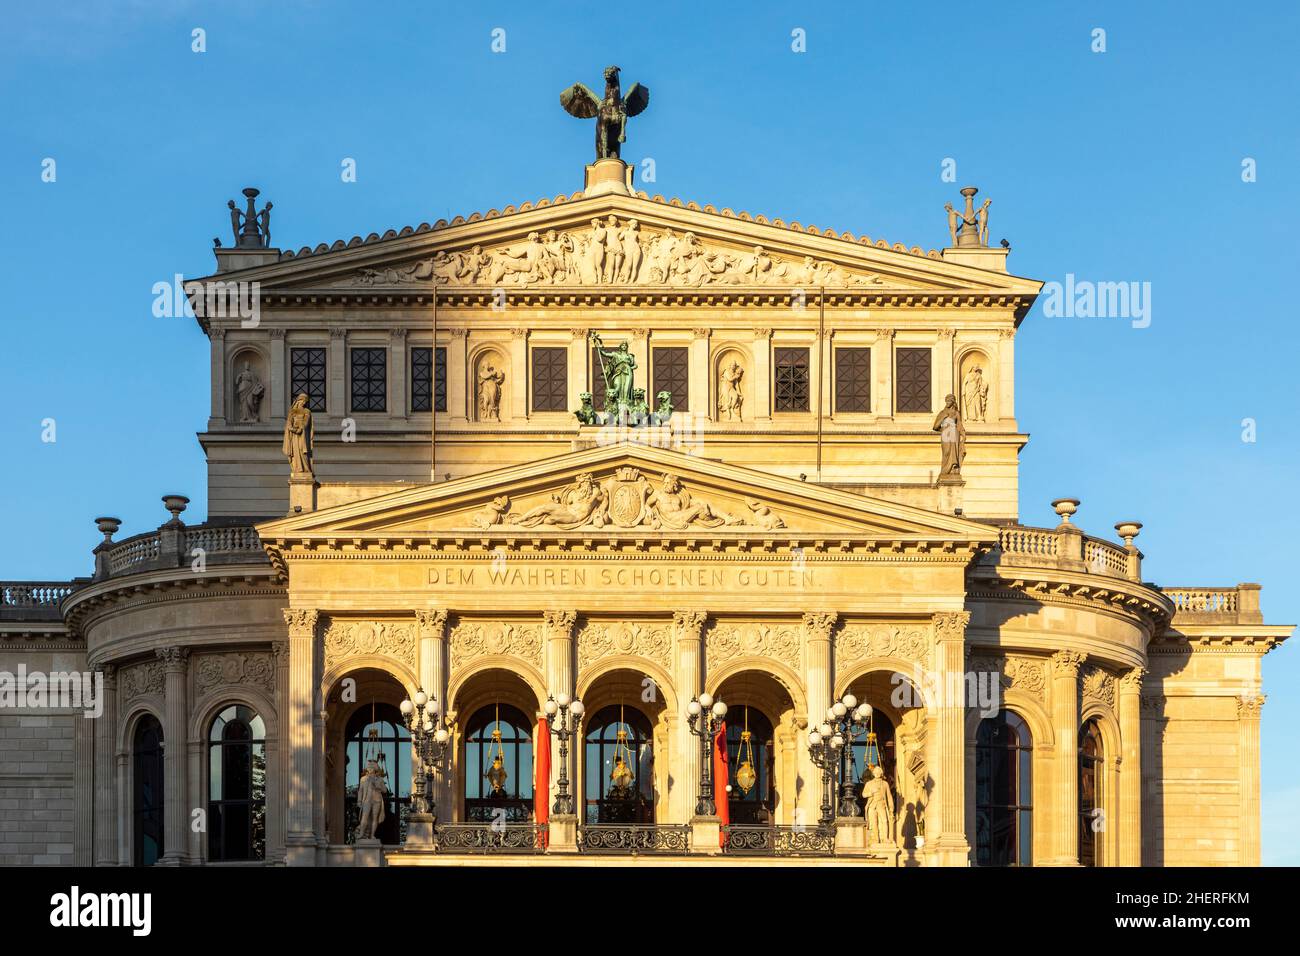 Facade of opera house „Alte Oper Frankfurt“ (old opera) with inscription „dem wahren schönen guten“, translated in English to the true beautiful good) Stock Photo